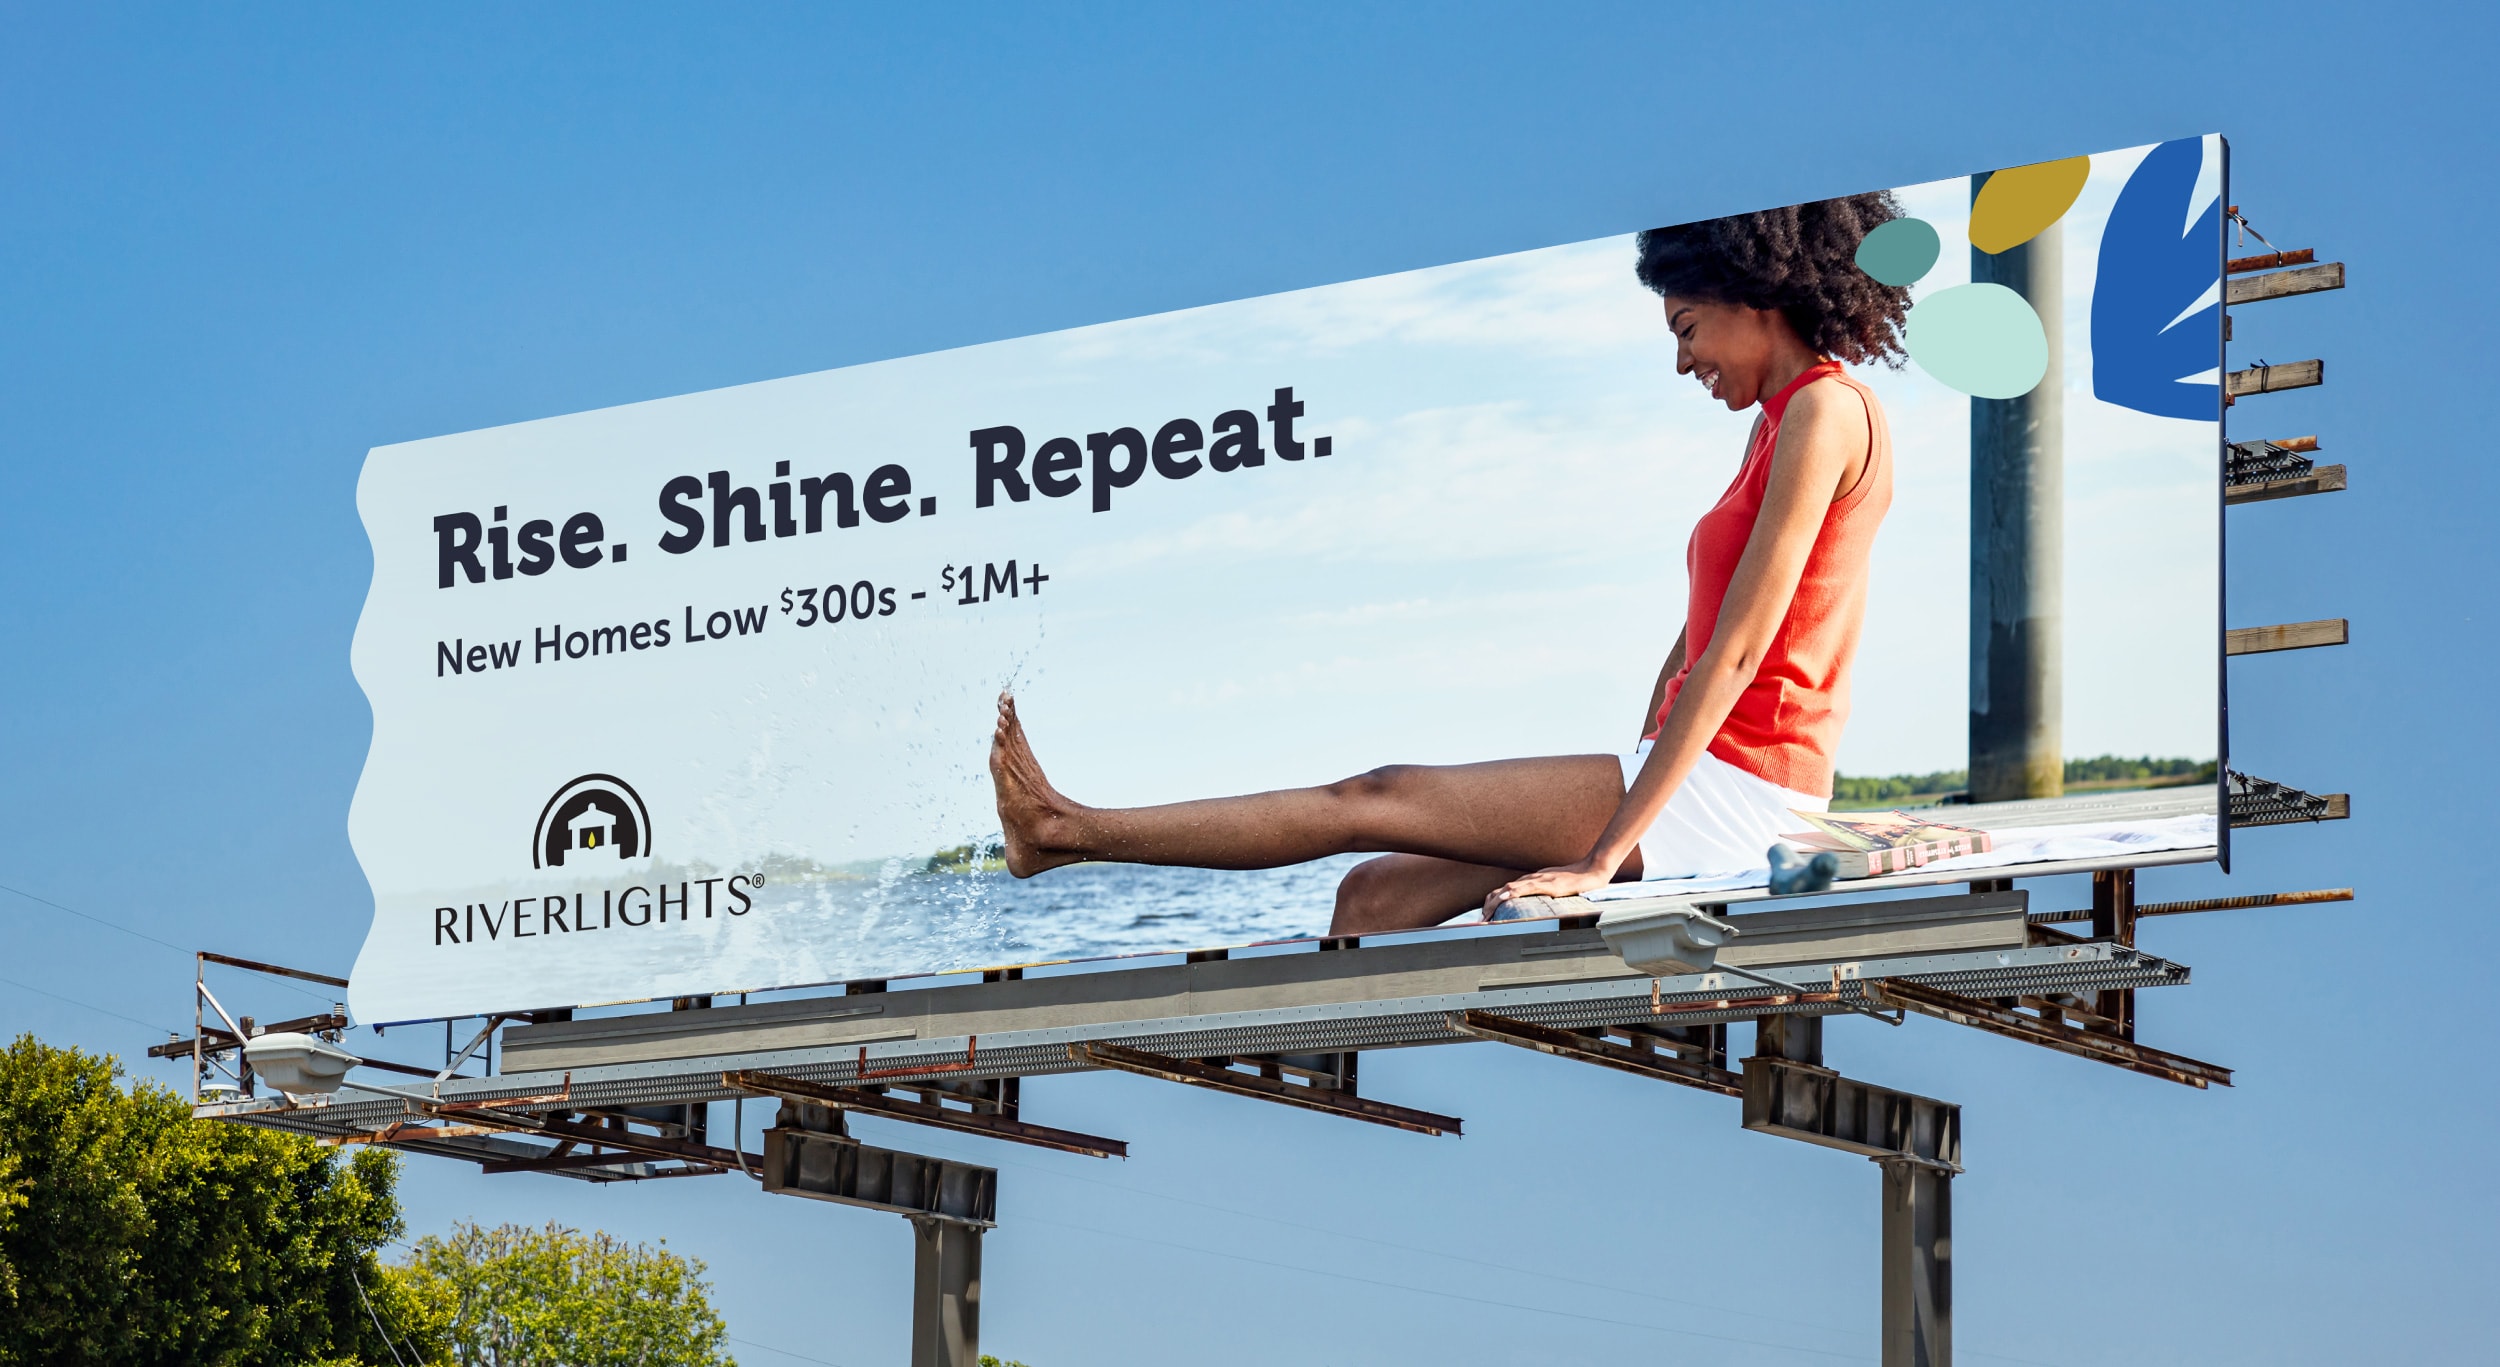 Riverlights Billboard - Rise. Shine. Repeat.